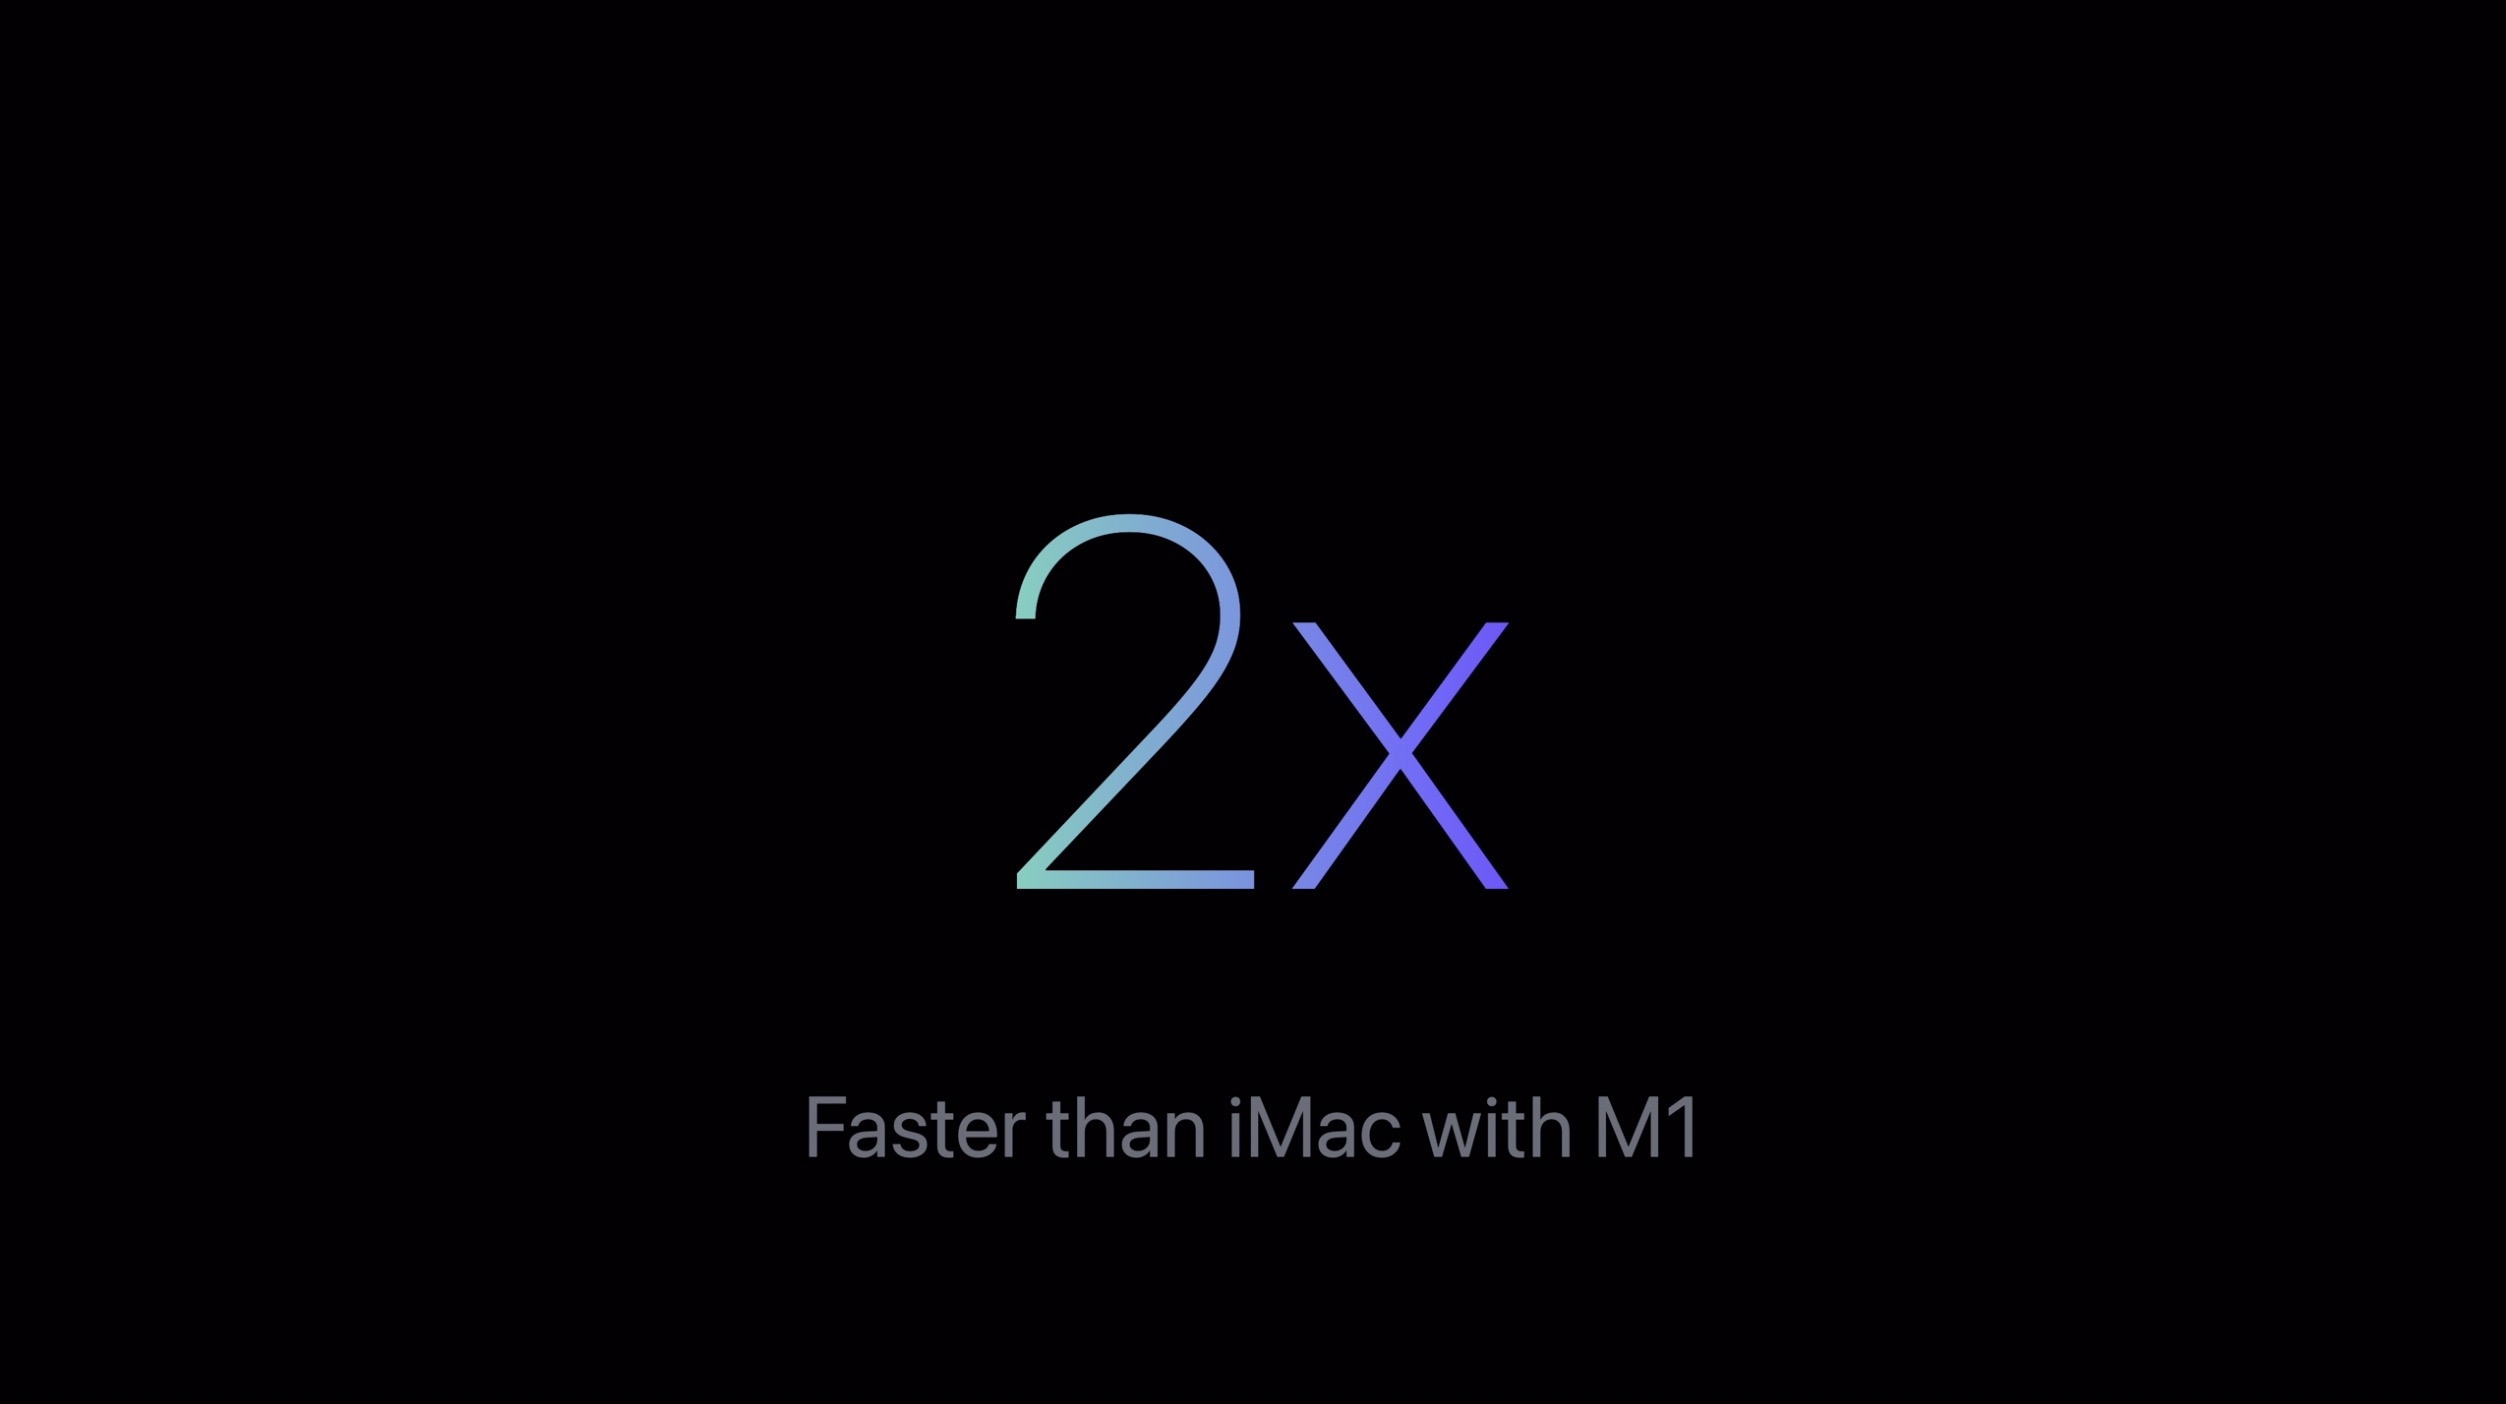 M3 iMac vs M1 iMac performance